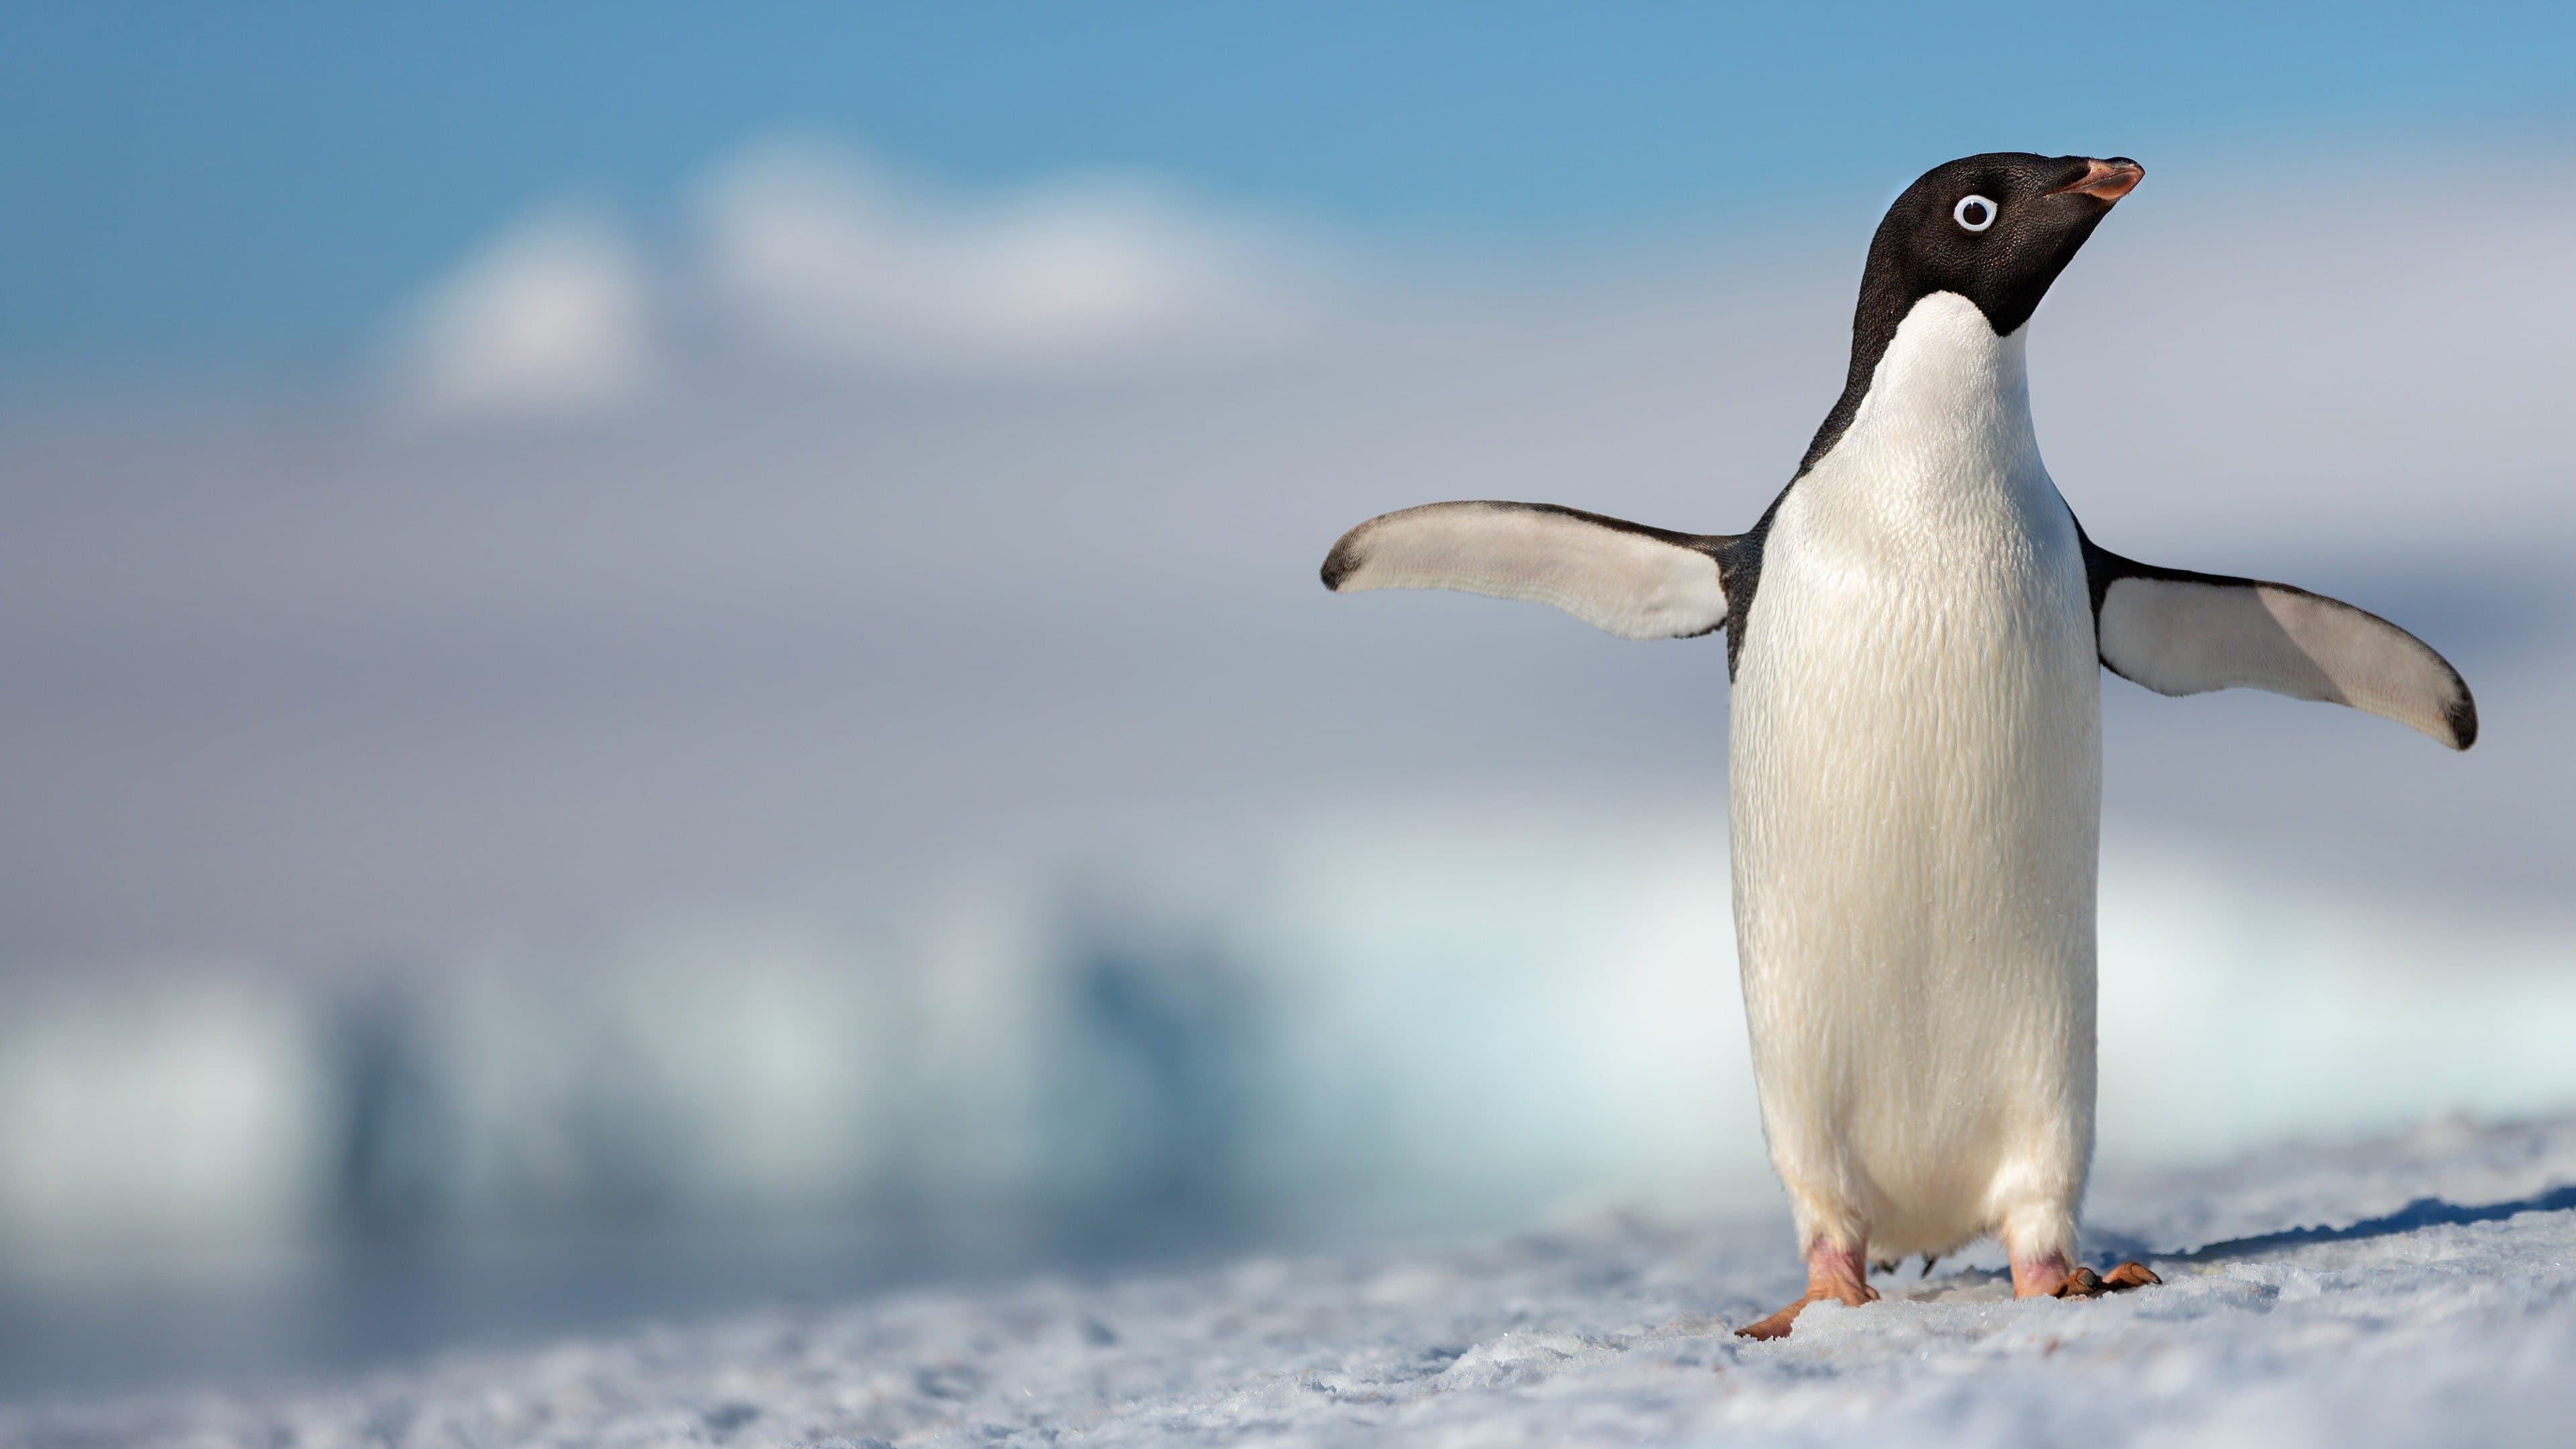 Penguins 2019 123movies